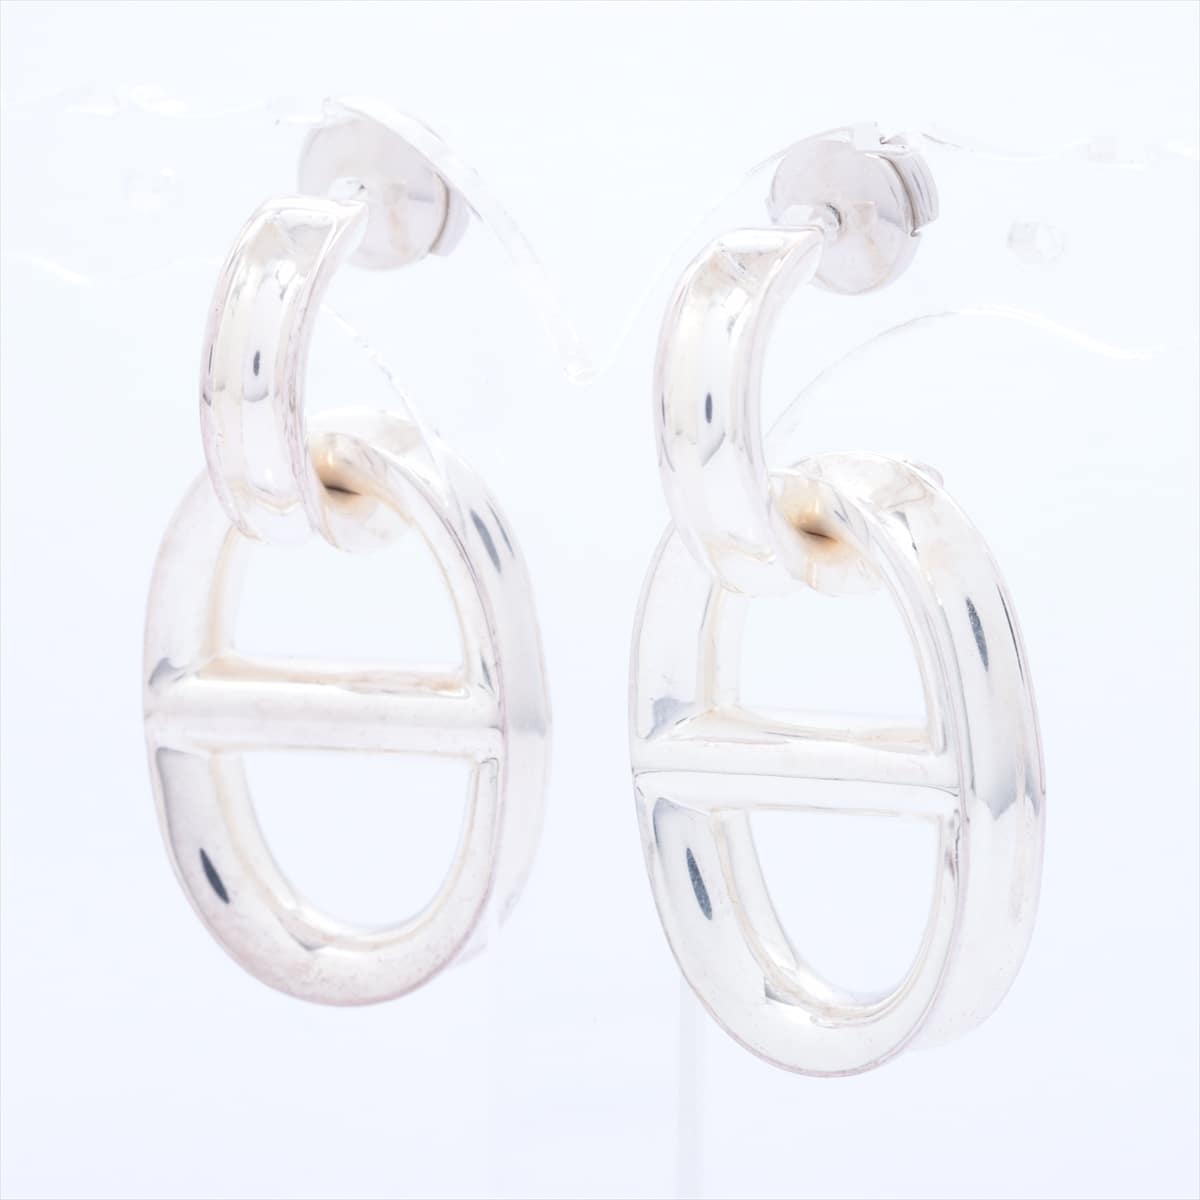 Hermès Chaîne d'Ancre Piercing jewelry (for both ears) 925 17.1g Silver